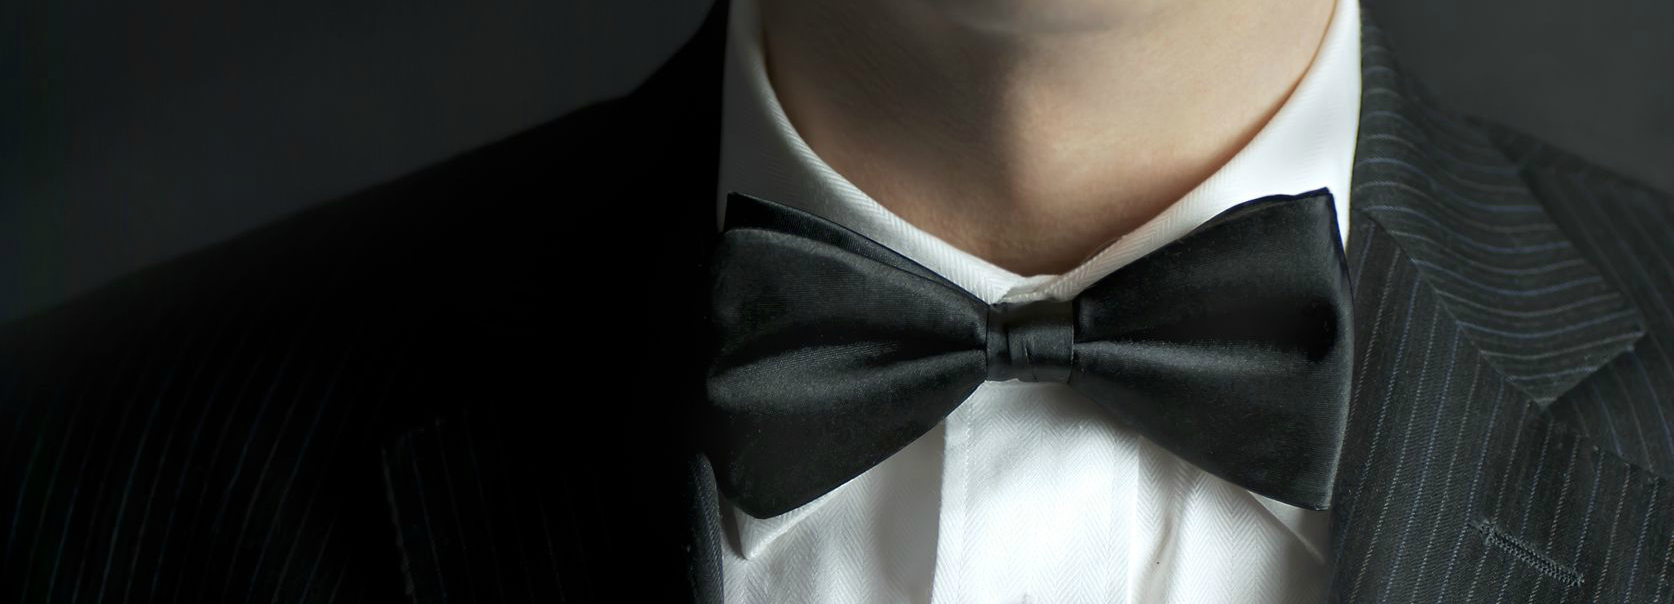 Should You Buy or Rent Wedding Tuxedos in Bergen County?